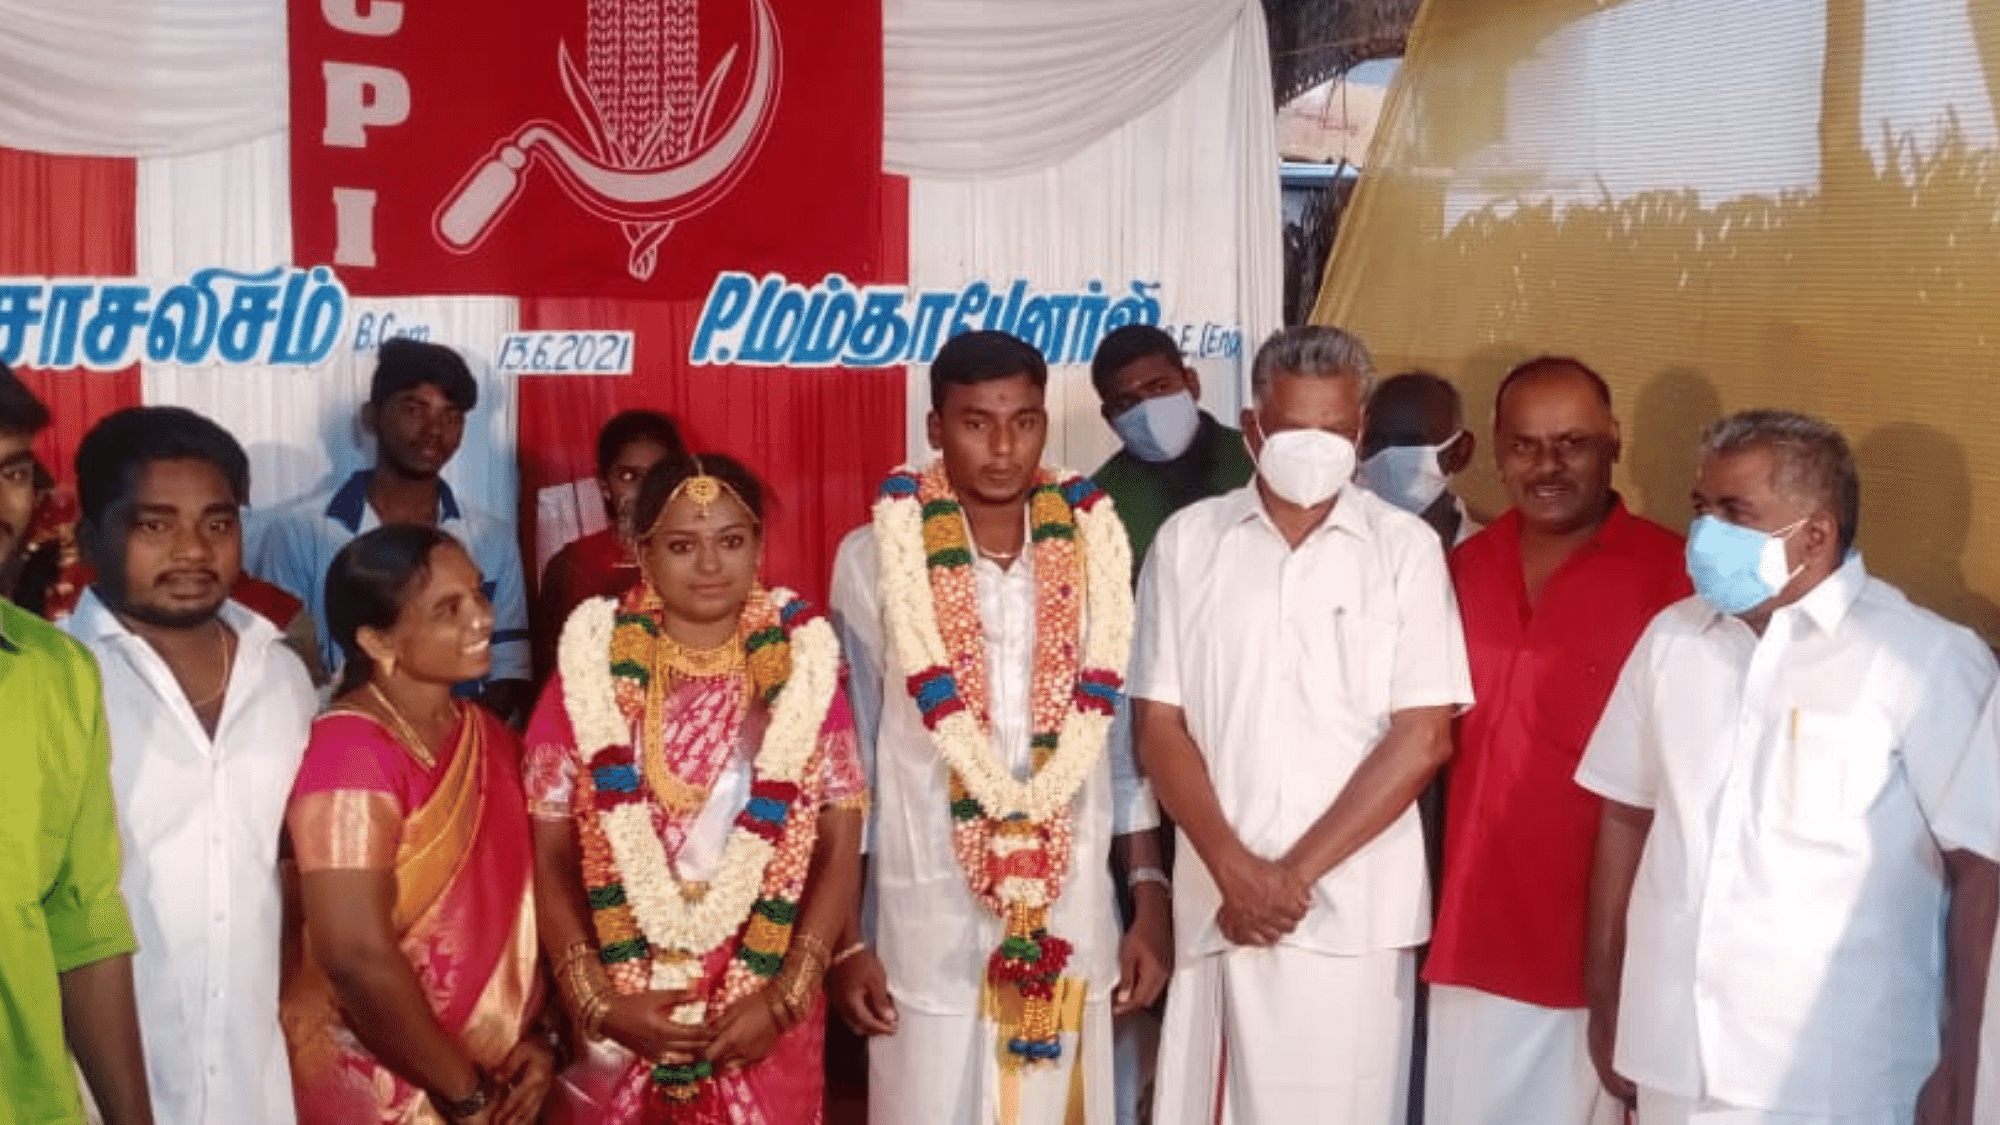 <div class="paragraphs"><p>P Mamata Banerjee Weds AM Socialism in Tamil Nadu</p></div>